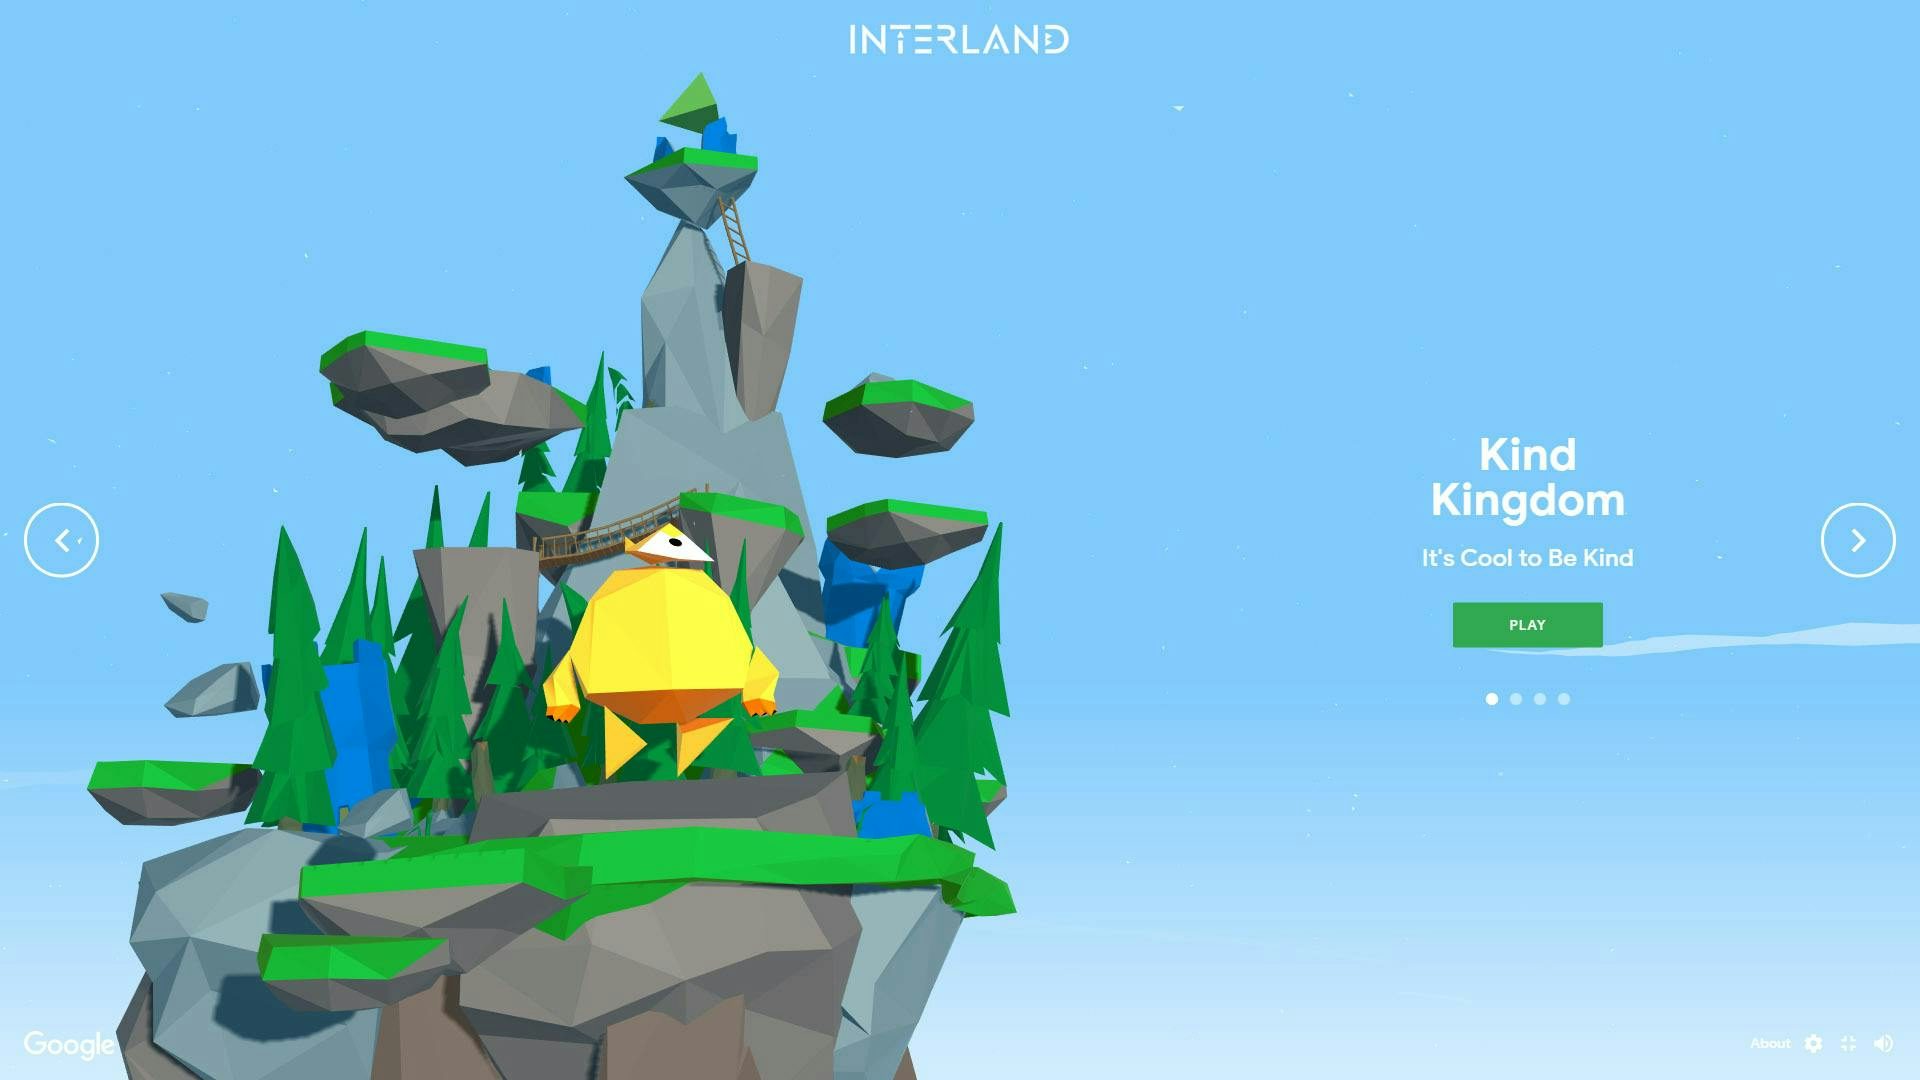 Google Interland Kind Kingdom overview